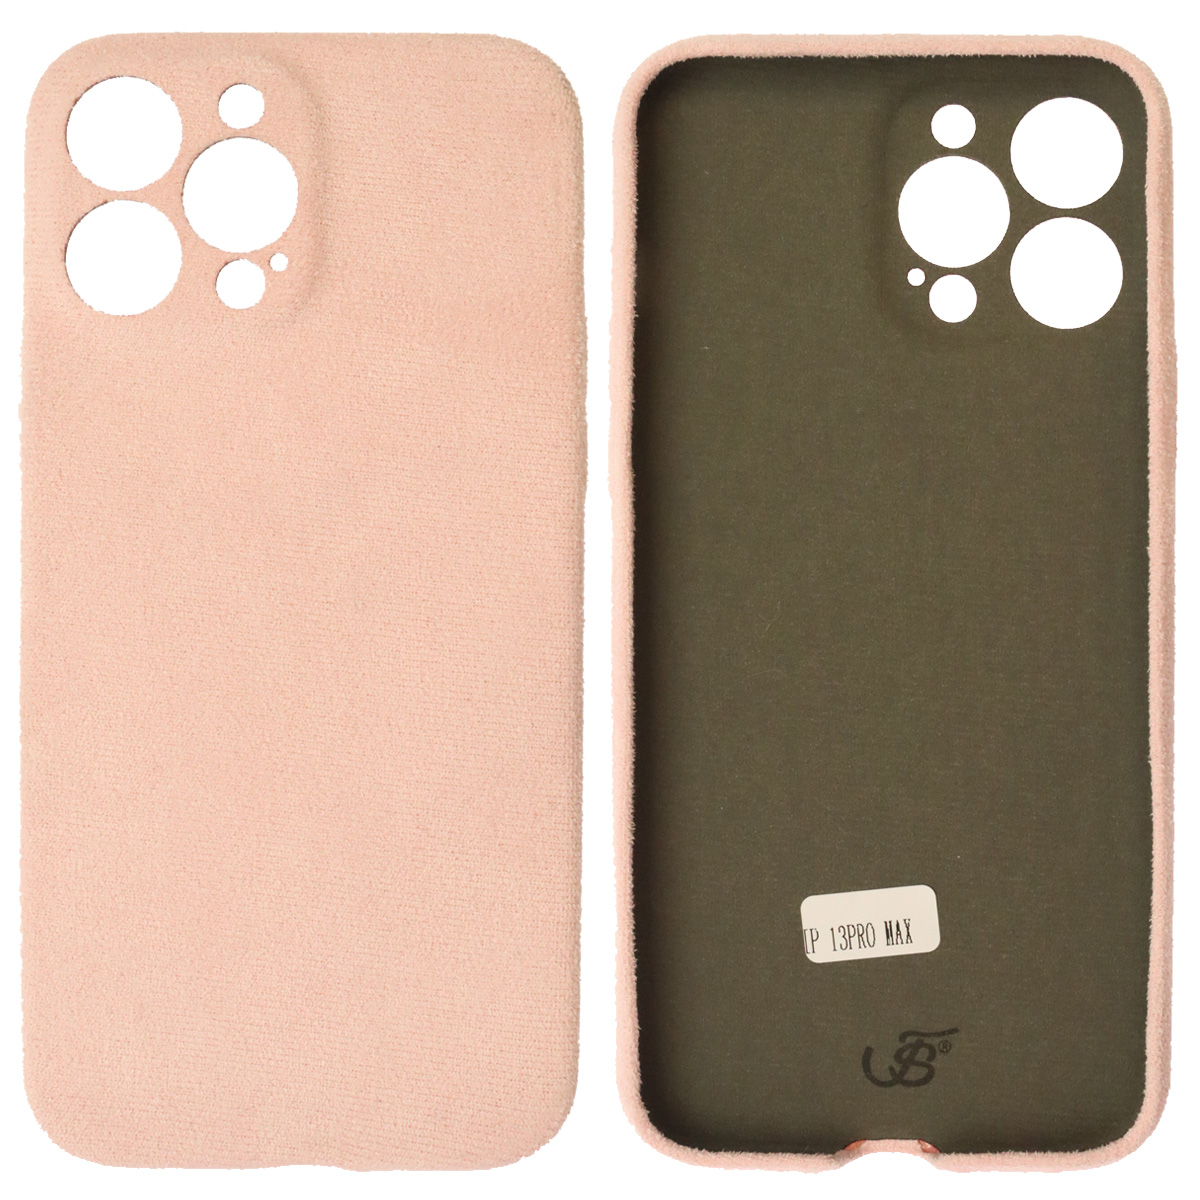 Чехол накладка для APPLE iPhone 13 Pro Max, защита камеры, силикон, имитация алькантара, цвет розовый